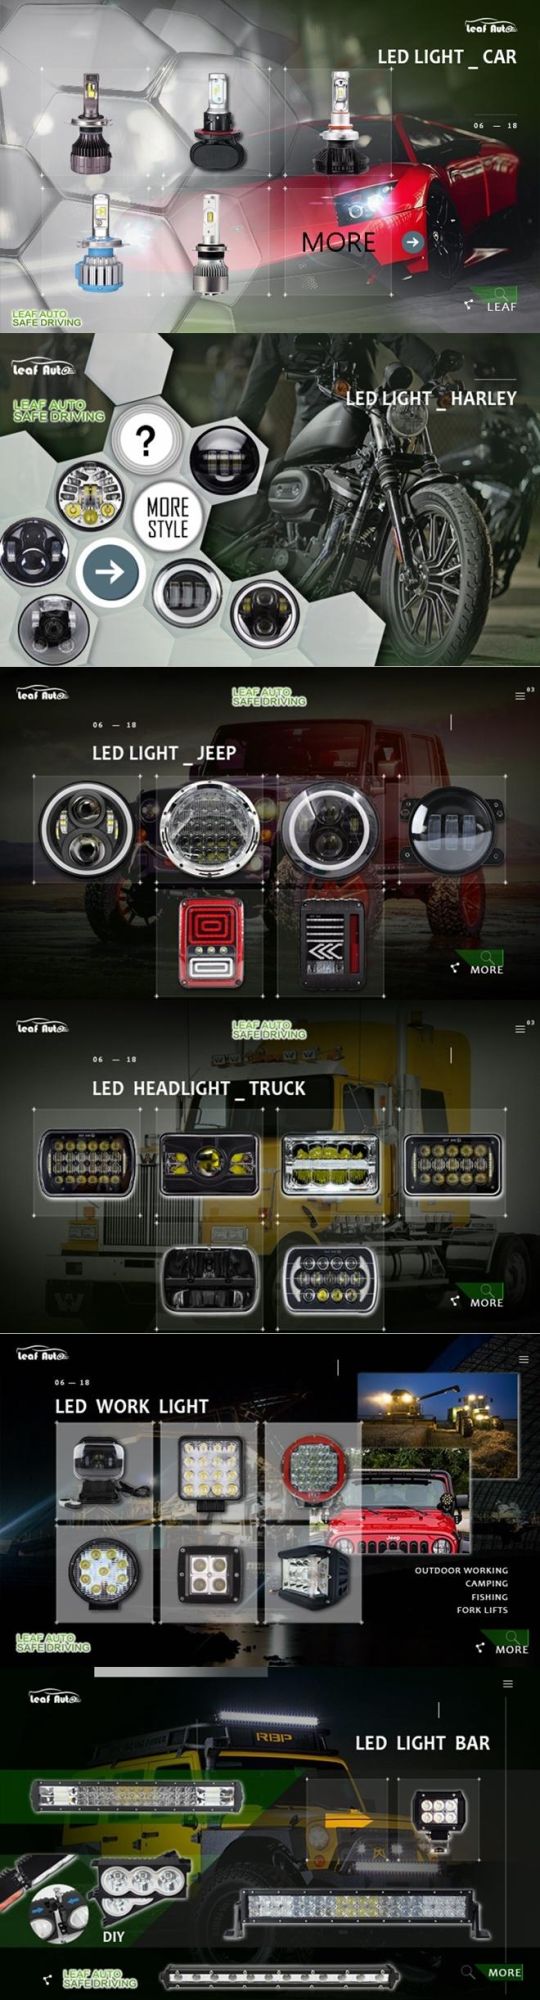 T1 H4 Turbo LED Headlight Kit with Canbus 72W 8000lm H1 H3 H7 H8 H9 H11 Hb3 Hb4 Fun LED Bulb Light Fog Light Drive Car Xenon Headlight Headlamp